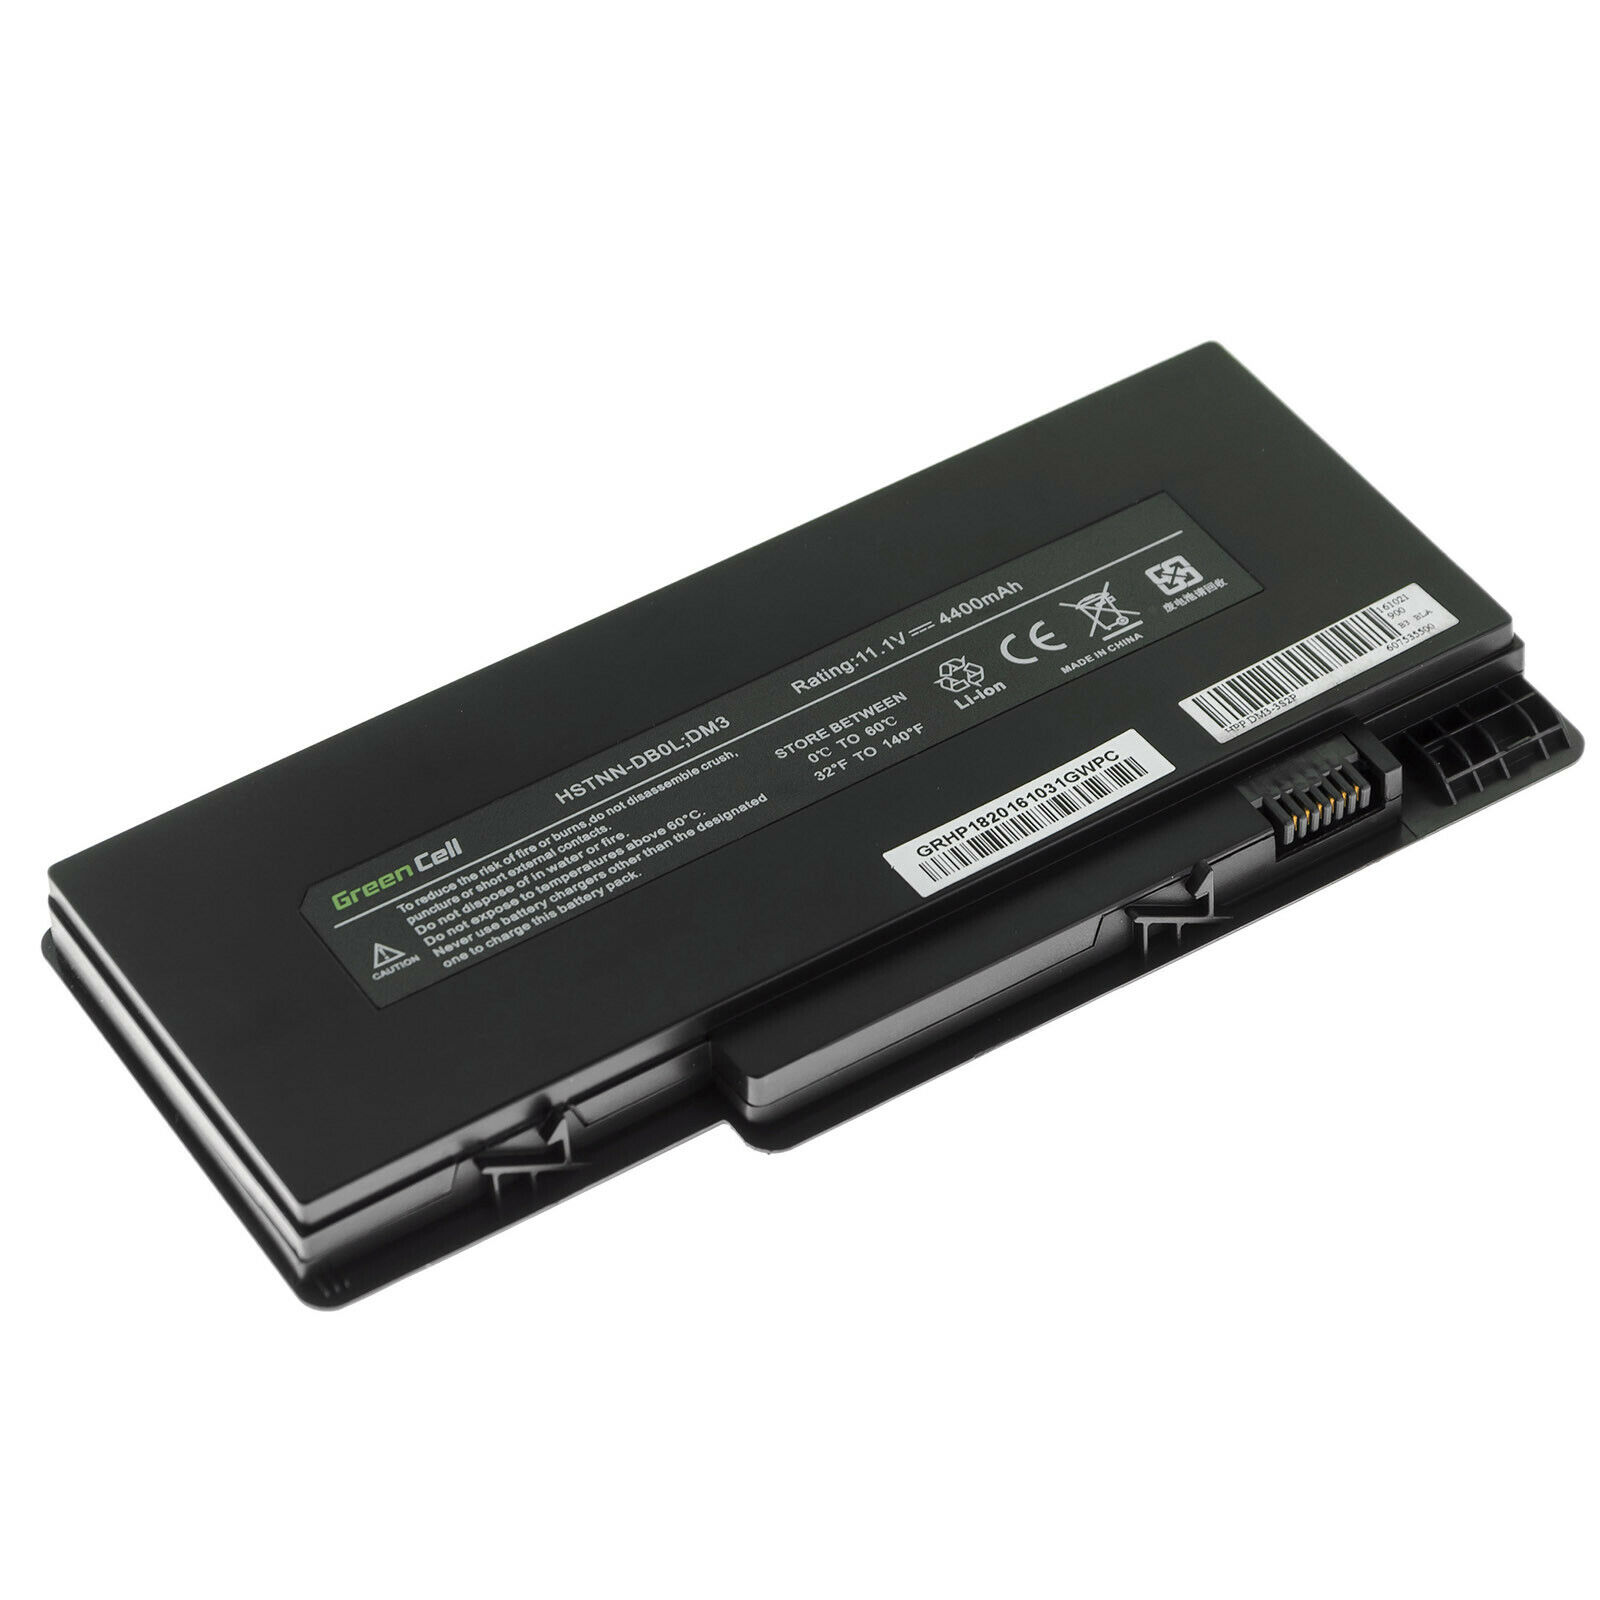 Batería para HP VG586AA HSTNN-OB0L HSTNN-E02C FD06 HSTNN-E03C HSTNN-DB0L(compatible)